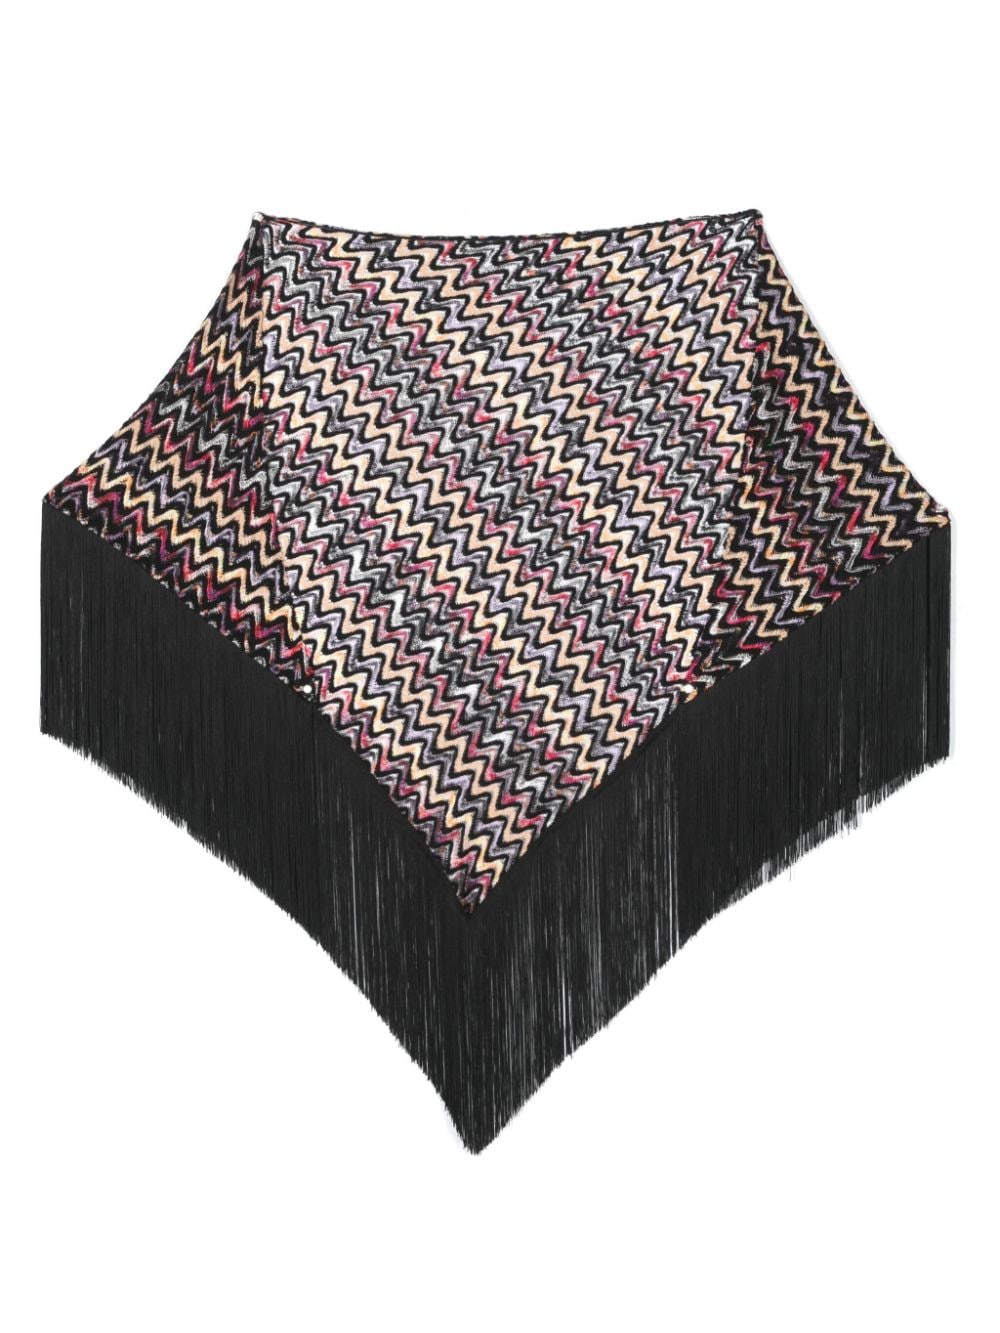 Black Multicolor Wool Blend Scarf - Signature Zigzag Design